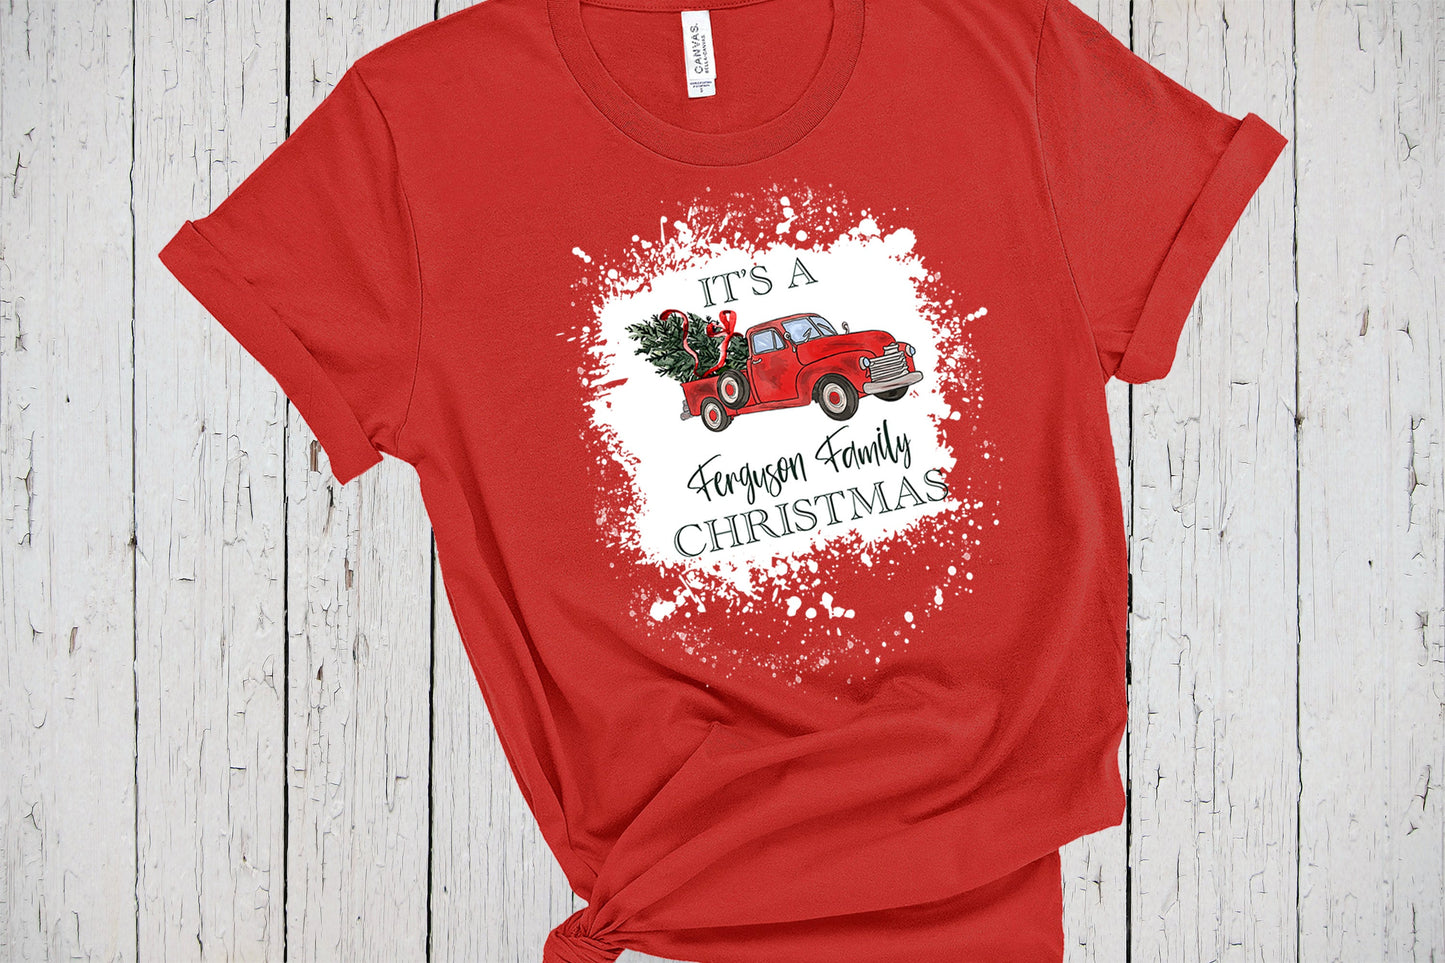 Red Vintage Truck Family Shirts, Bleached Shirt Effect, Christmas Shirt, Christmas Tree Shirt, Group Shirt, Personalized Shirt, Bleach Tee